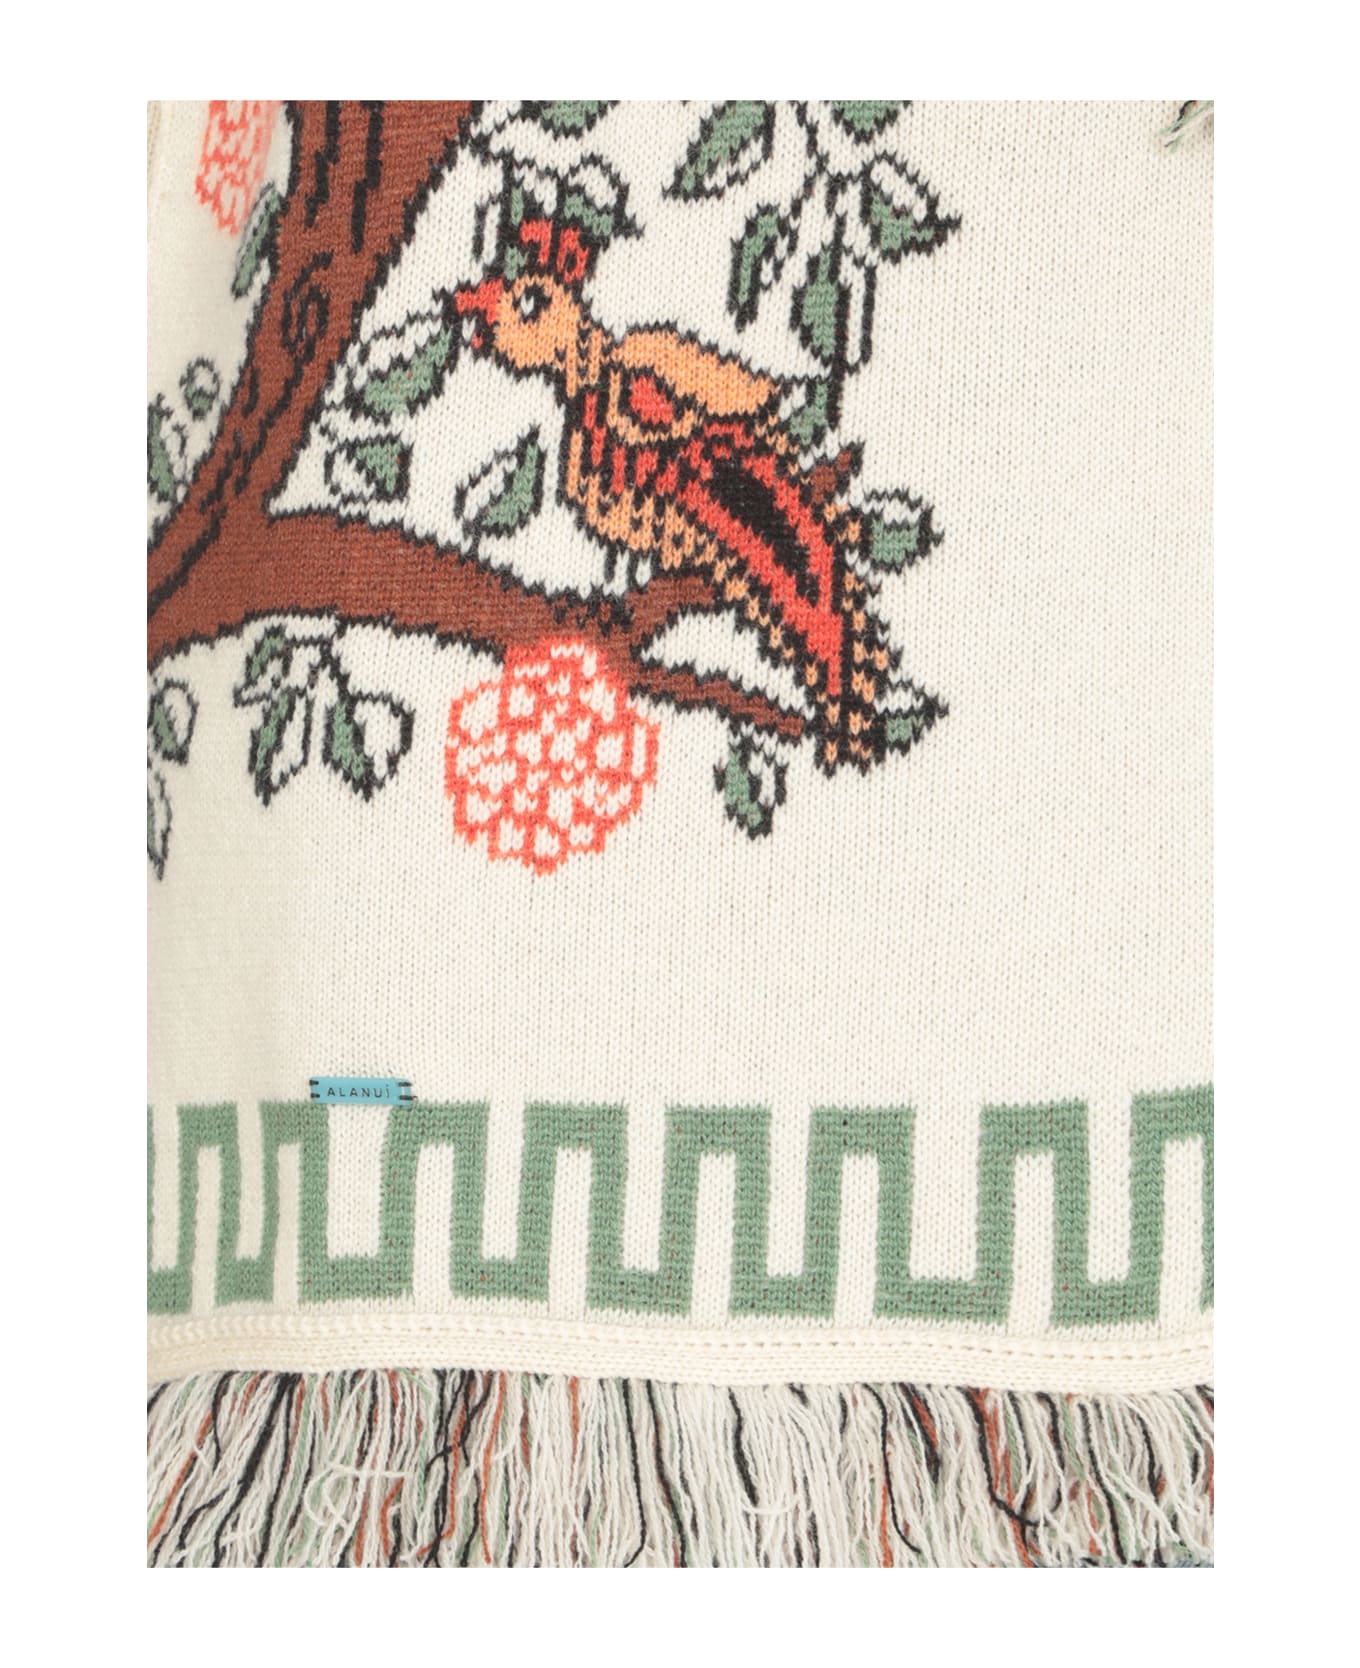 Alanui Embroidered Cashmere Tree Of Life Cardigan - White